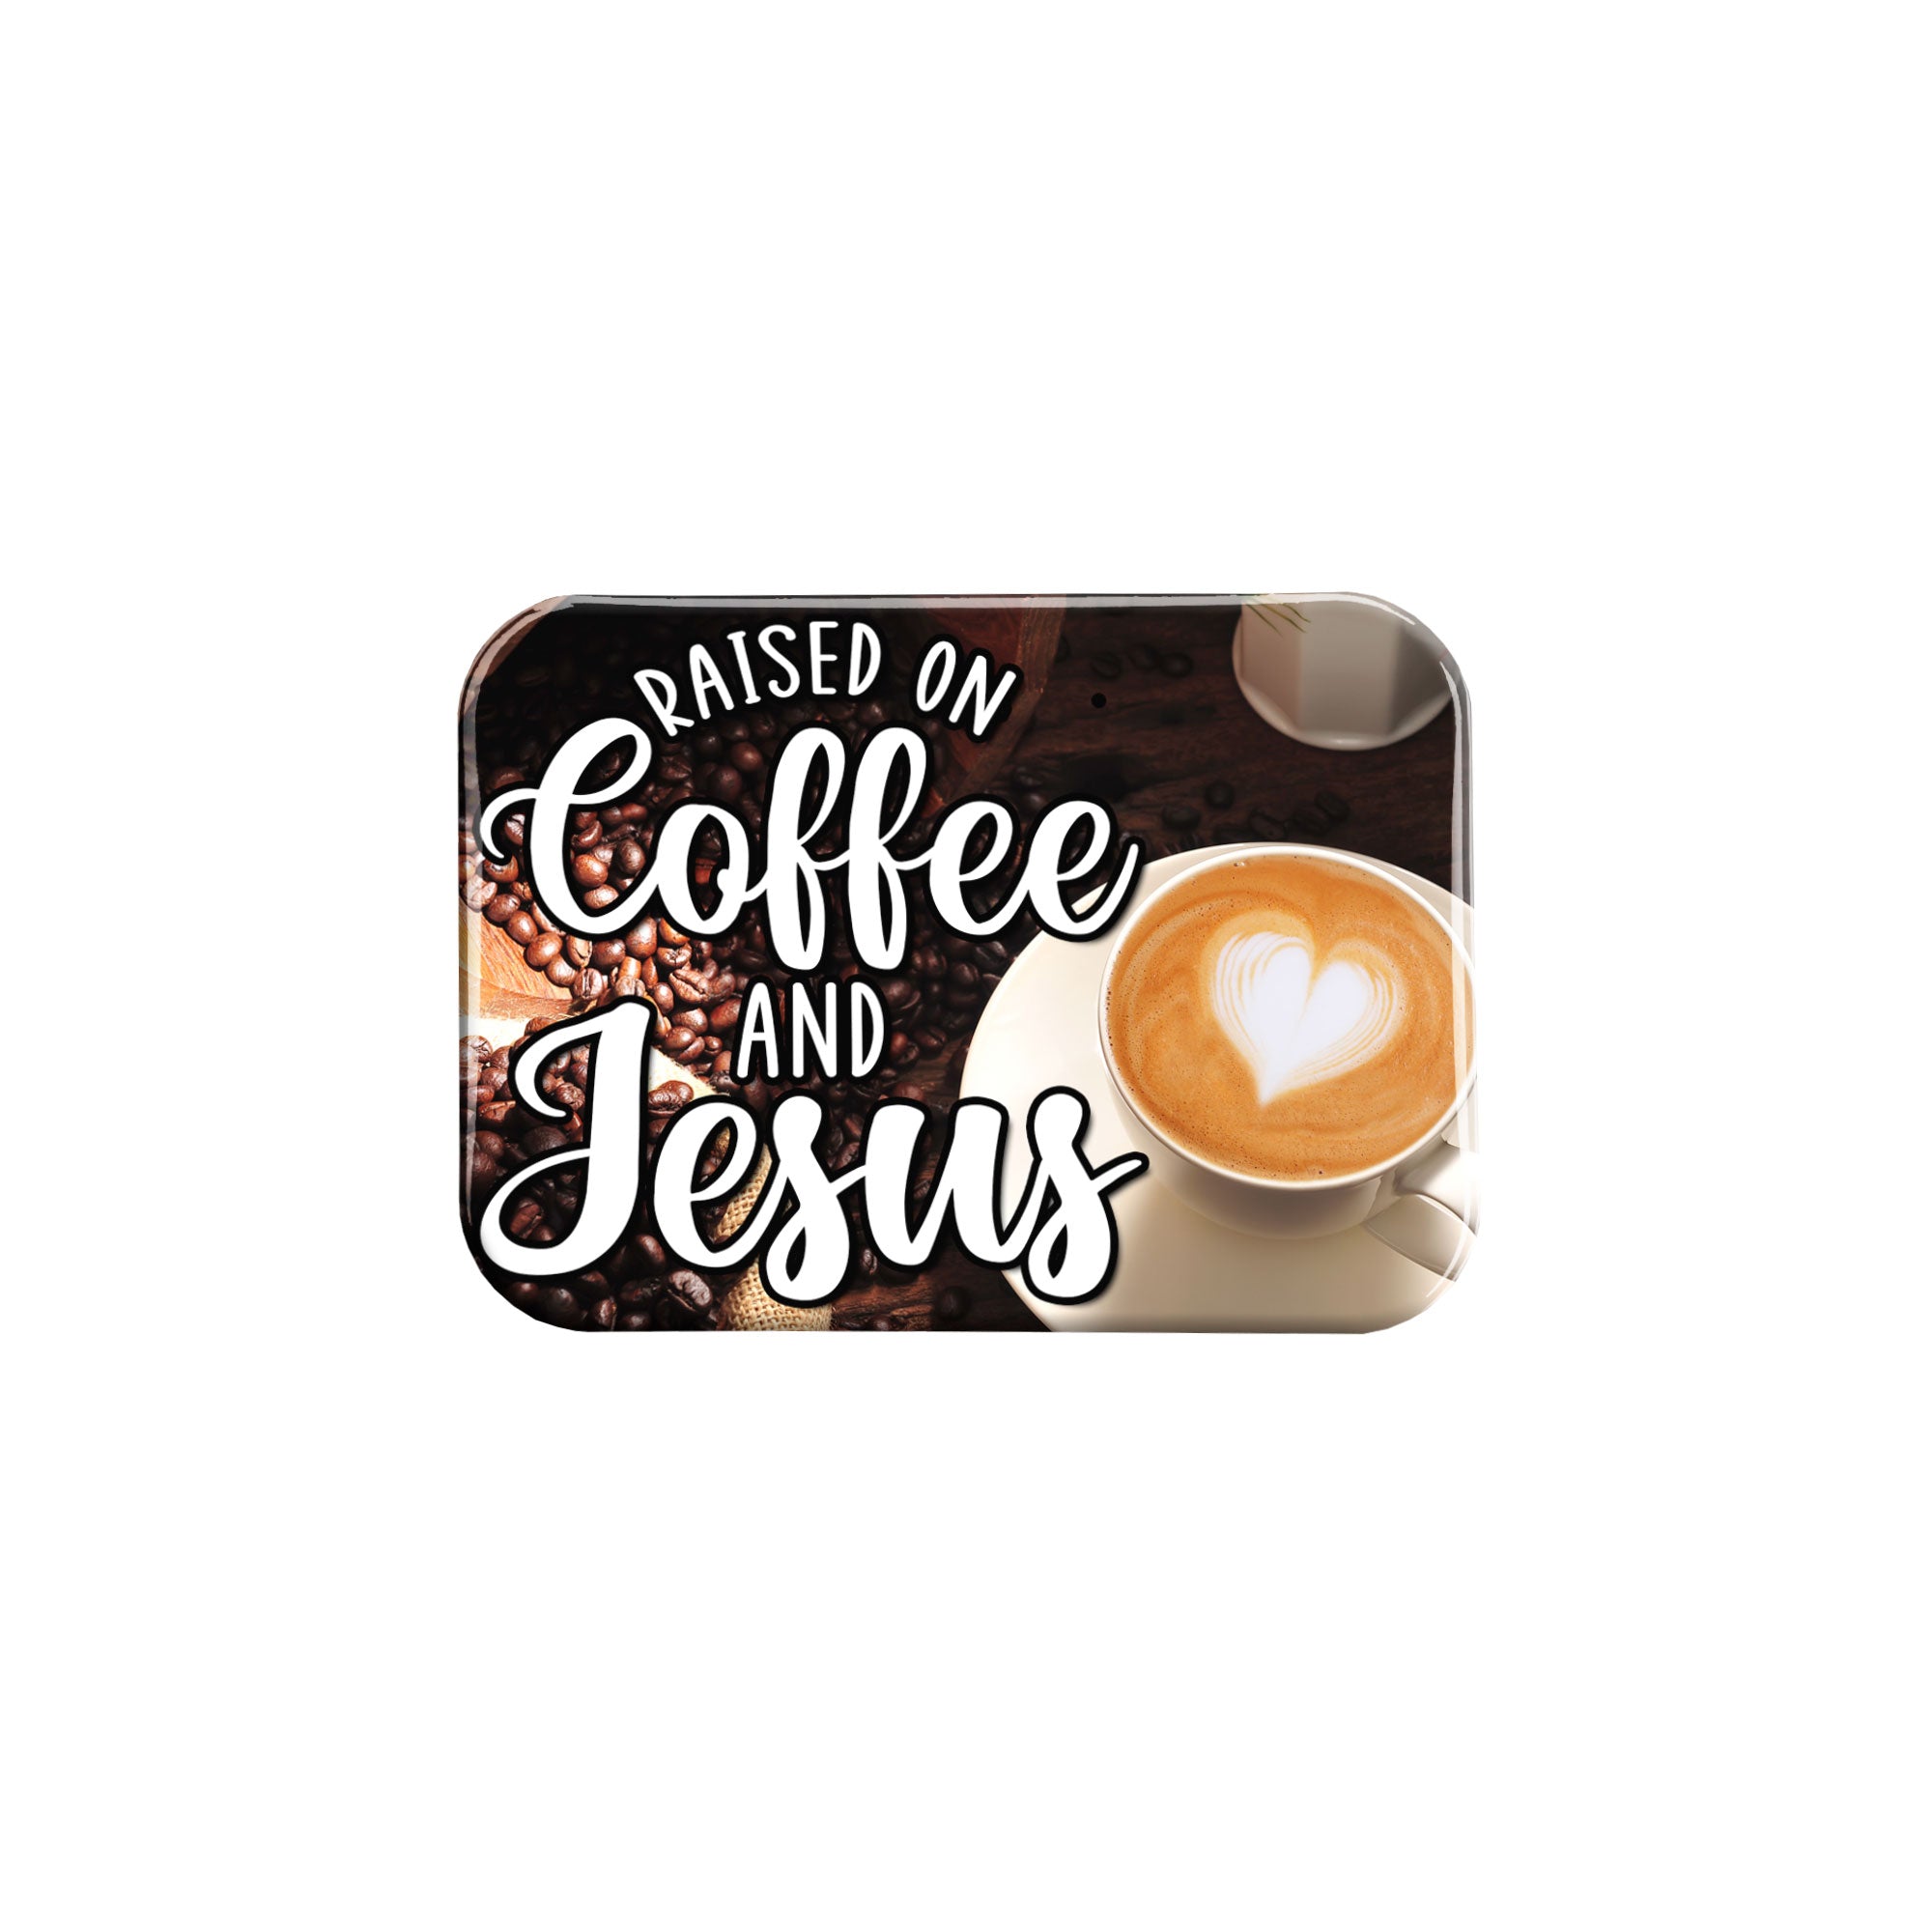 "Coffee and Jesus" - 2.5" X 3.5" Rectangle Fridge Magnets